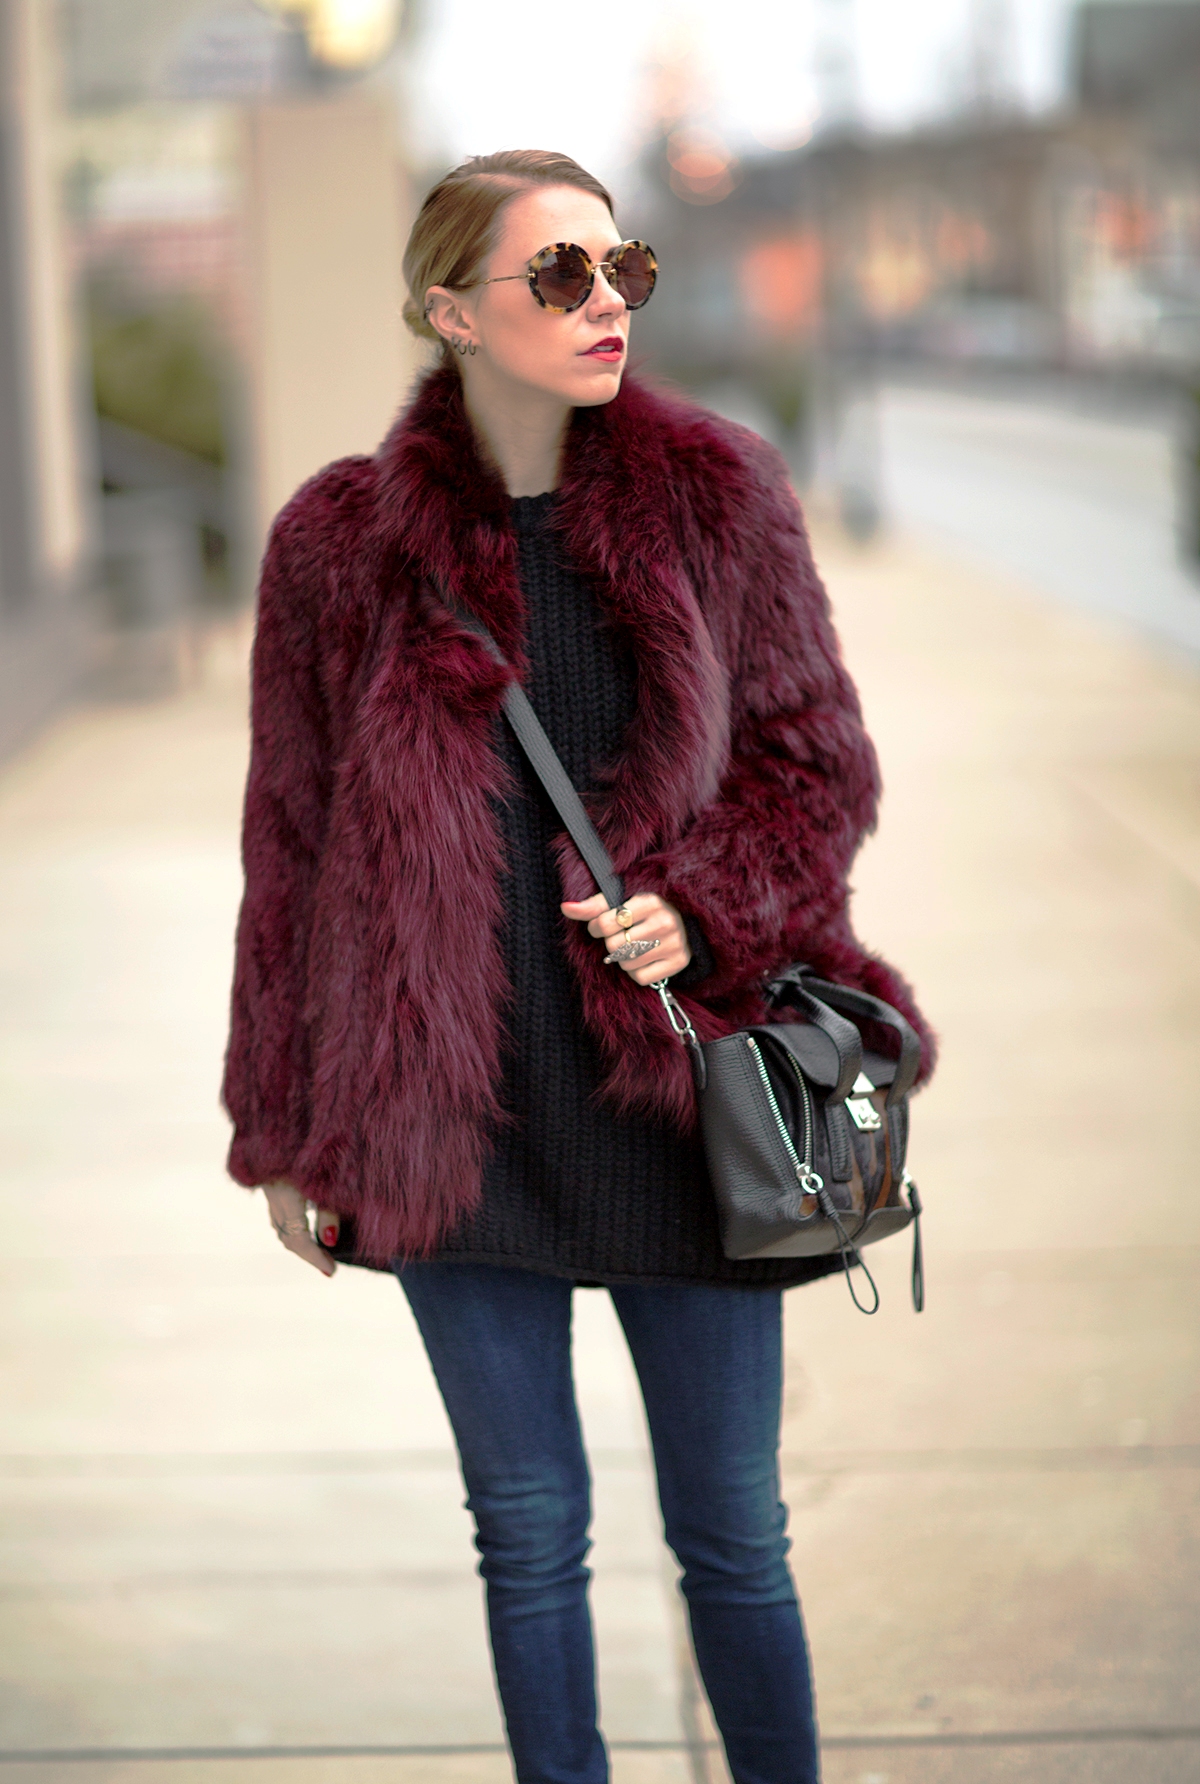 velvet-color-fur-coat-and-jacket-outfit-ideas